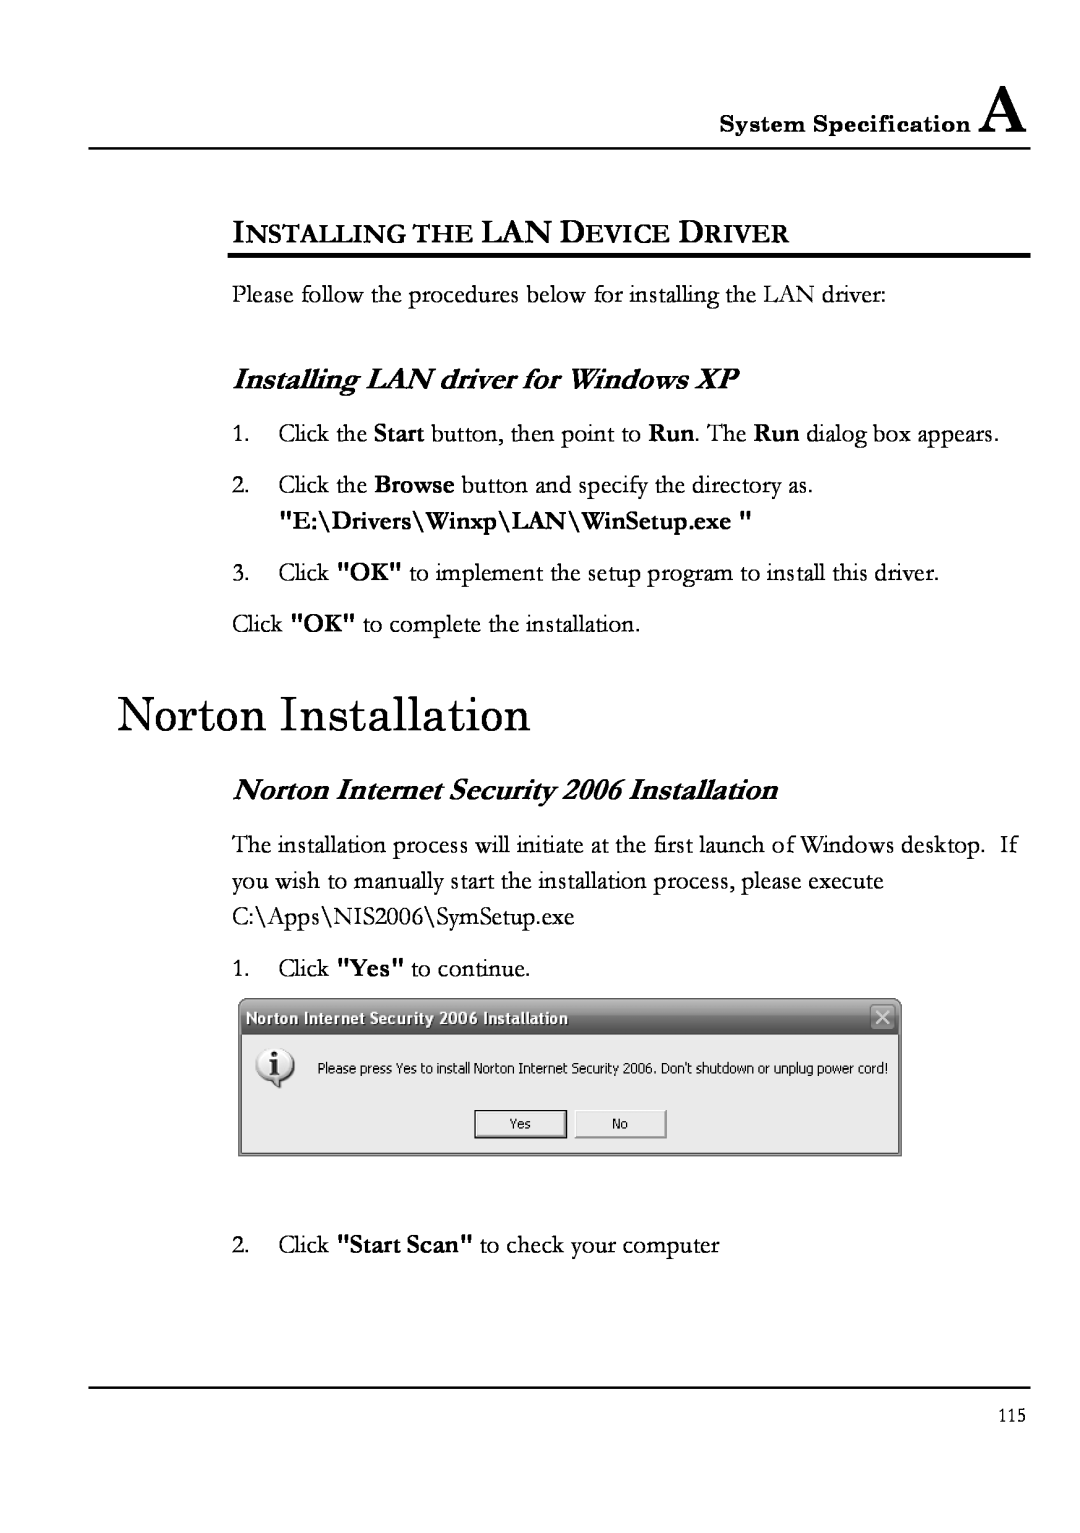 Everex NM3900W manual Norton Installation, Installing LAN driver for Windows XP, Norton Internet Security 2006 Installation 